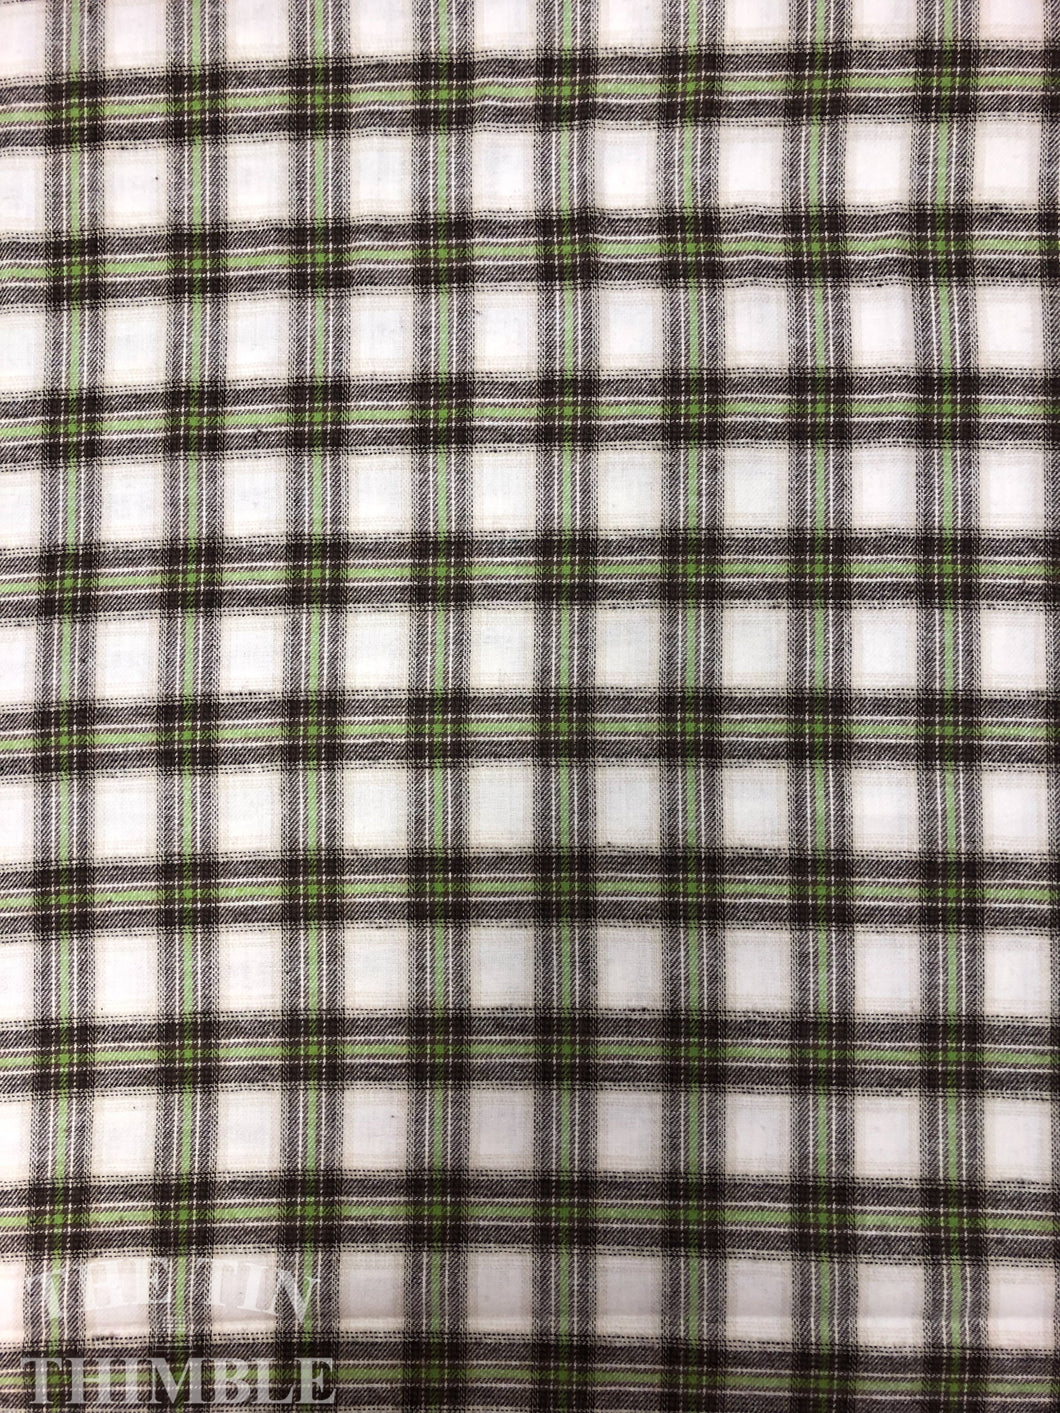 Plaid Flannel Fabric / Cotton Fabric / Green Brown Plaid / 1 Yard / Fabric by Yard / Garment Fabric / Flannel Plaid / Plaid Fabric